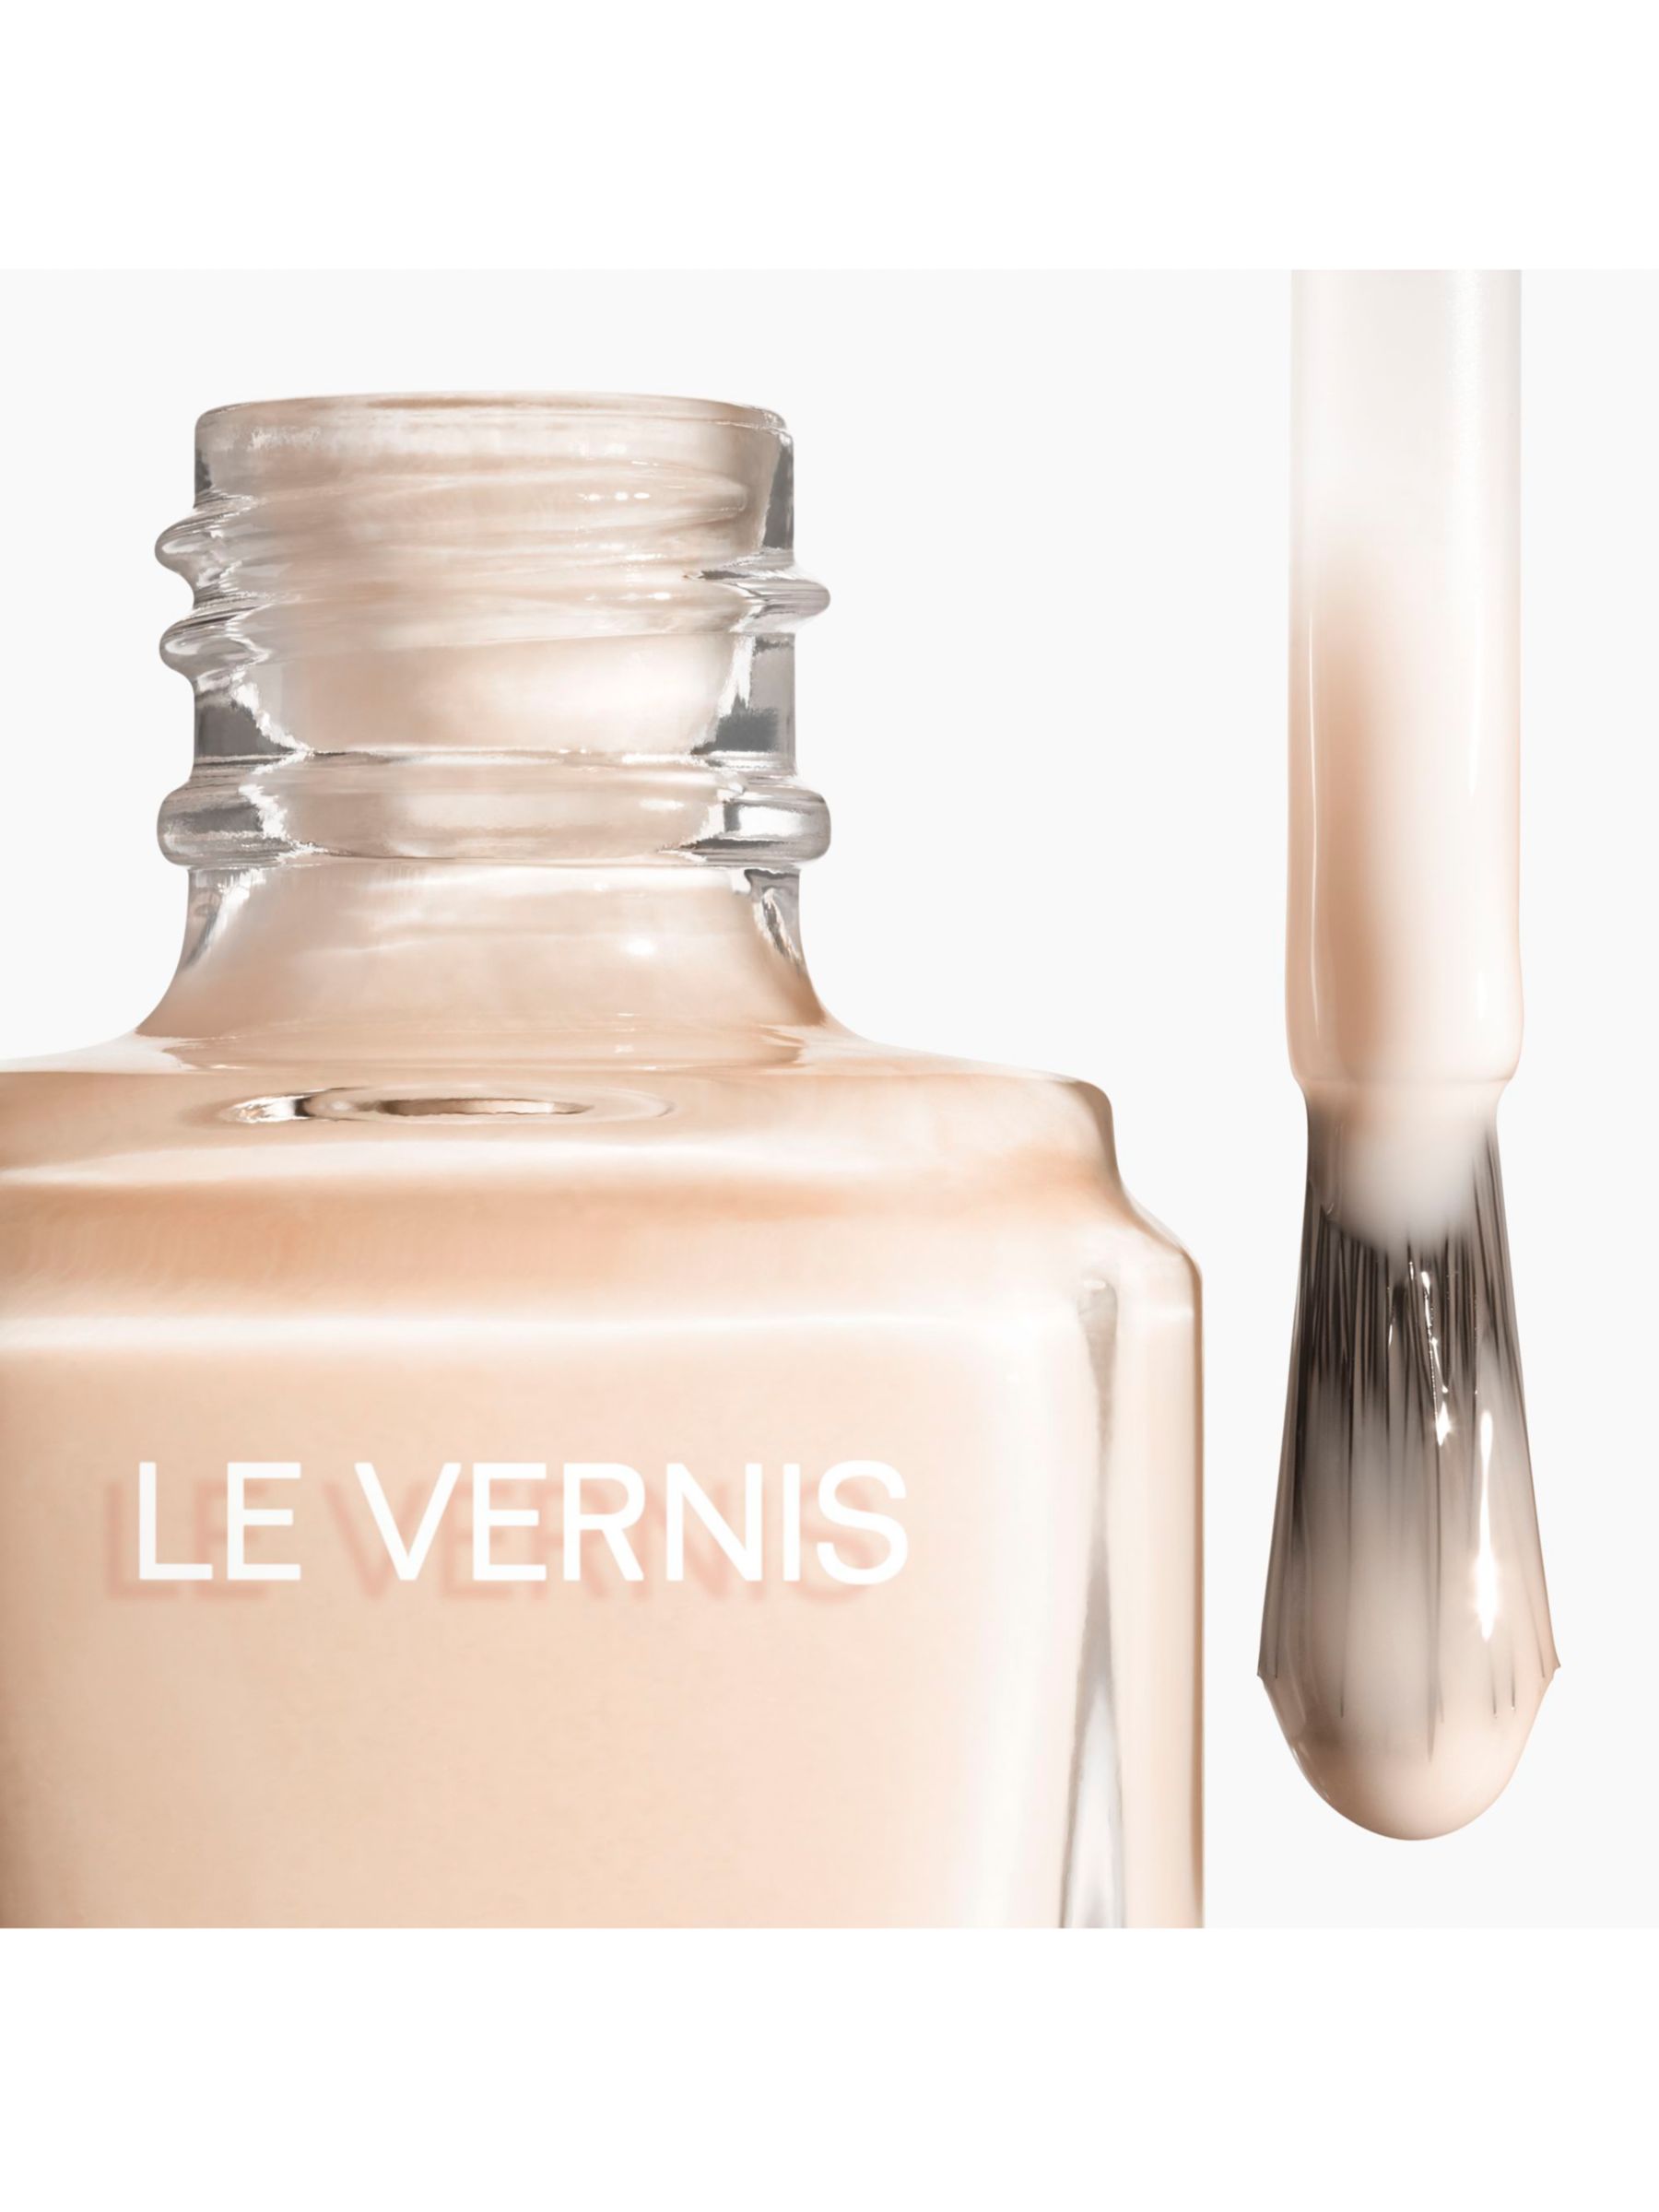 CHANEL Le Vernis Nail Colour, White Silk 167 at John Lewis & Partners